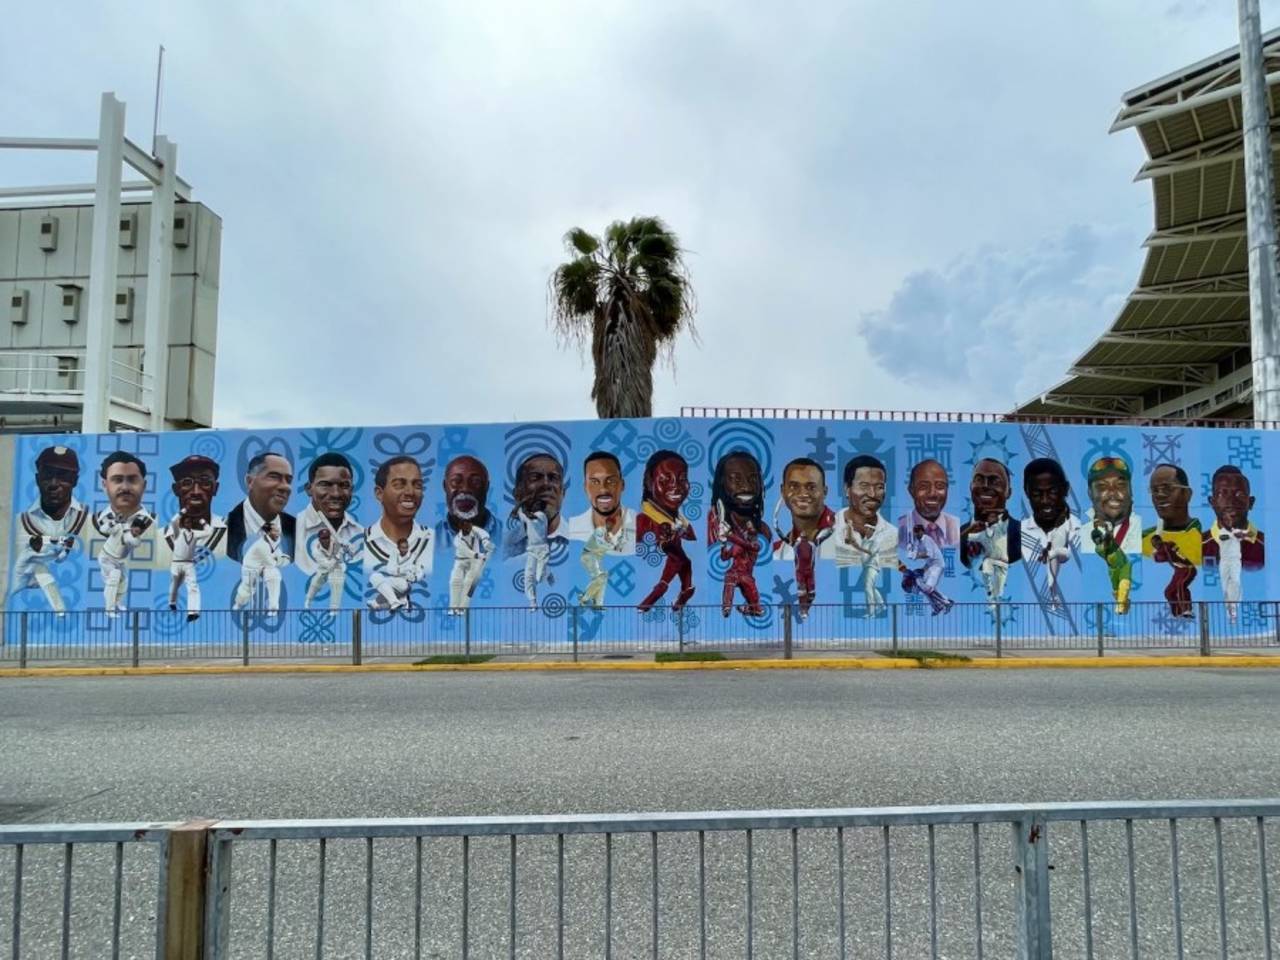 The players on the Sabina Park mural represent almost 80 years of Jamaican cricket&nbsp;&nbsp;&bull;&nbsp;&nbsp;Tiana Anglin/Tiana Anglin